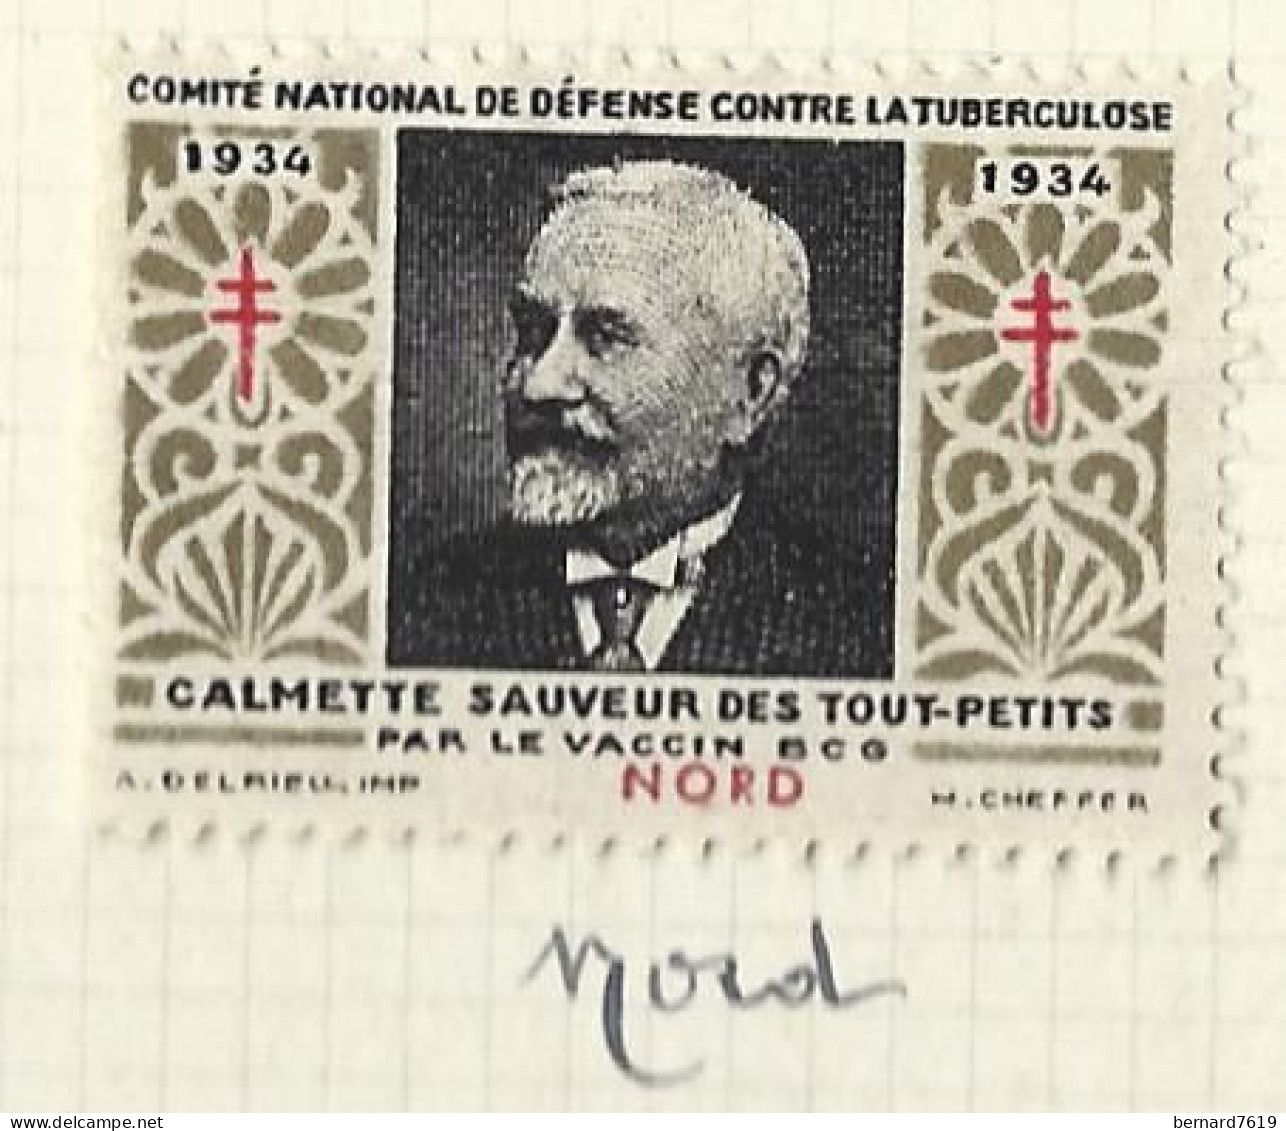 Timbre   France- - Croix Rouge - Erinnophilie -comIte National De Defense  La Tuberculose -1934- Calmette -59 Nord - Tuberkulose-Serien